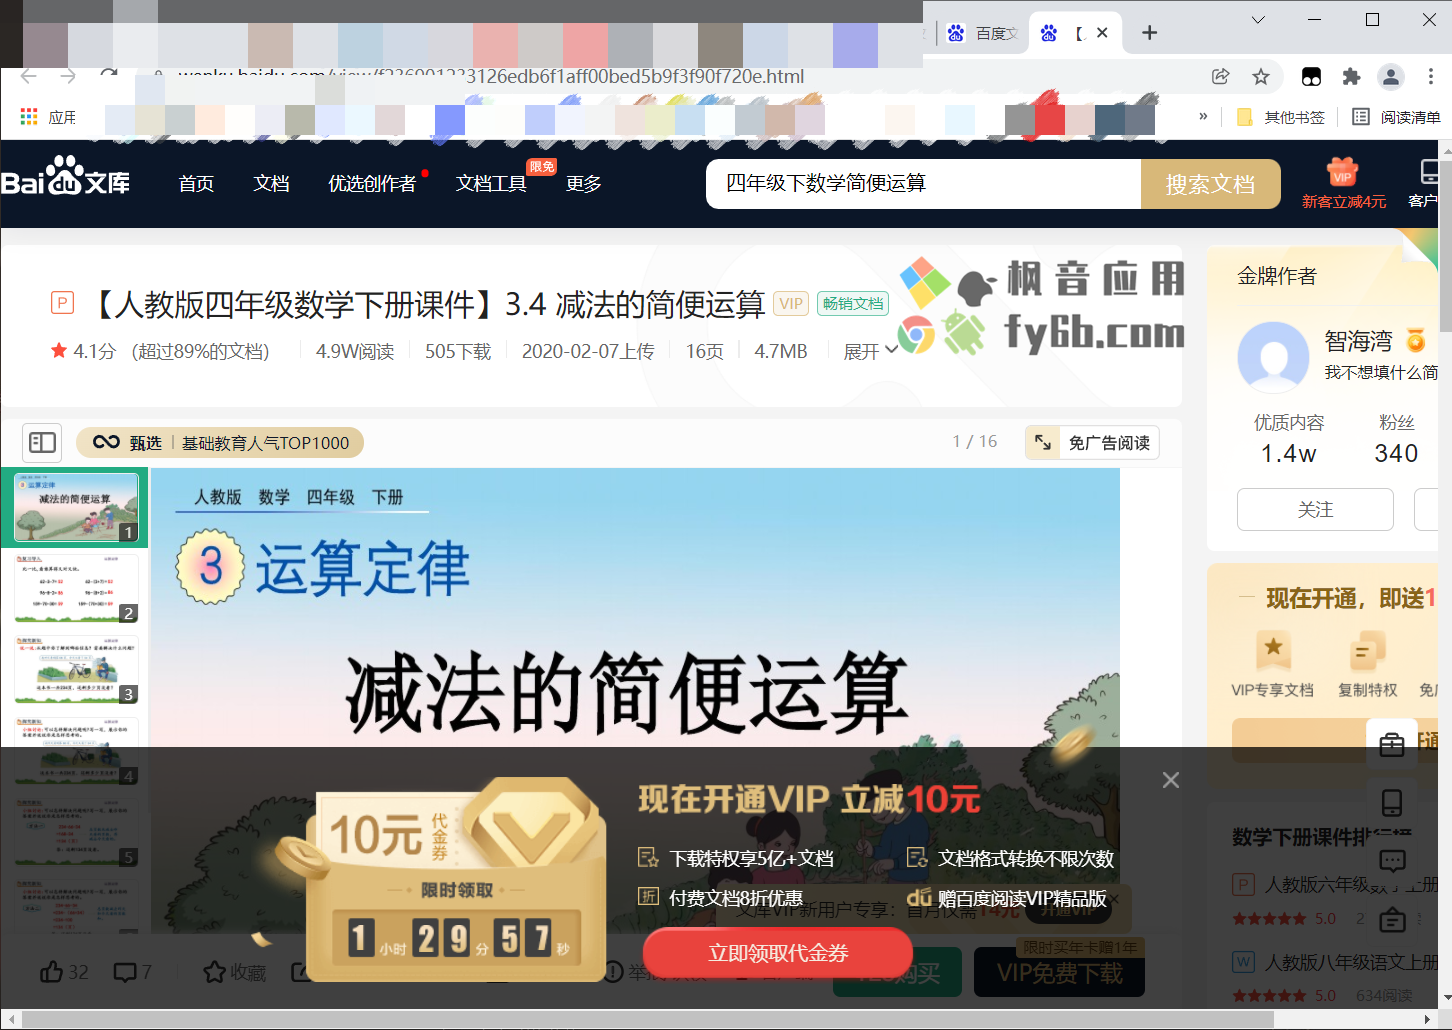 Chrome | 百度药丸 Baidu Capsule 2.3.1